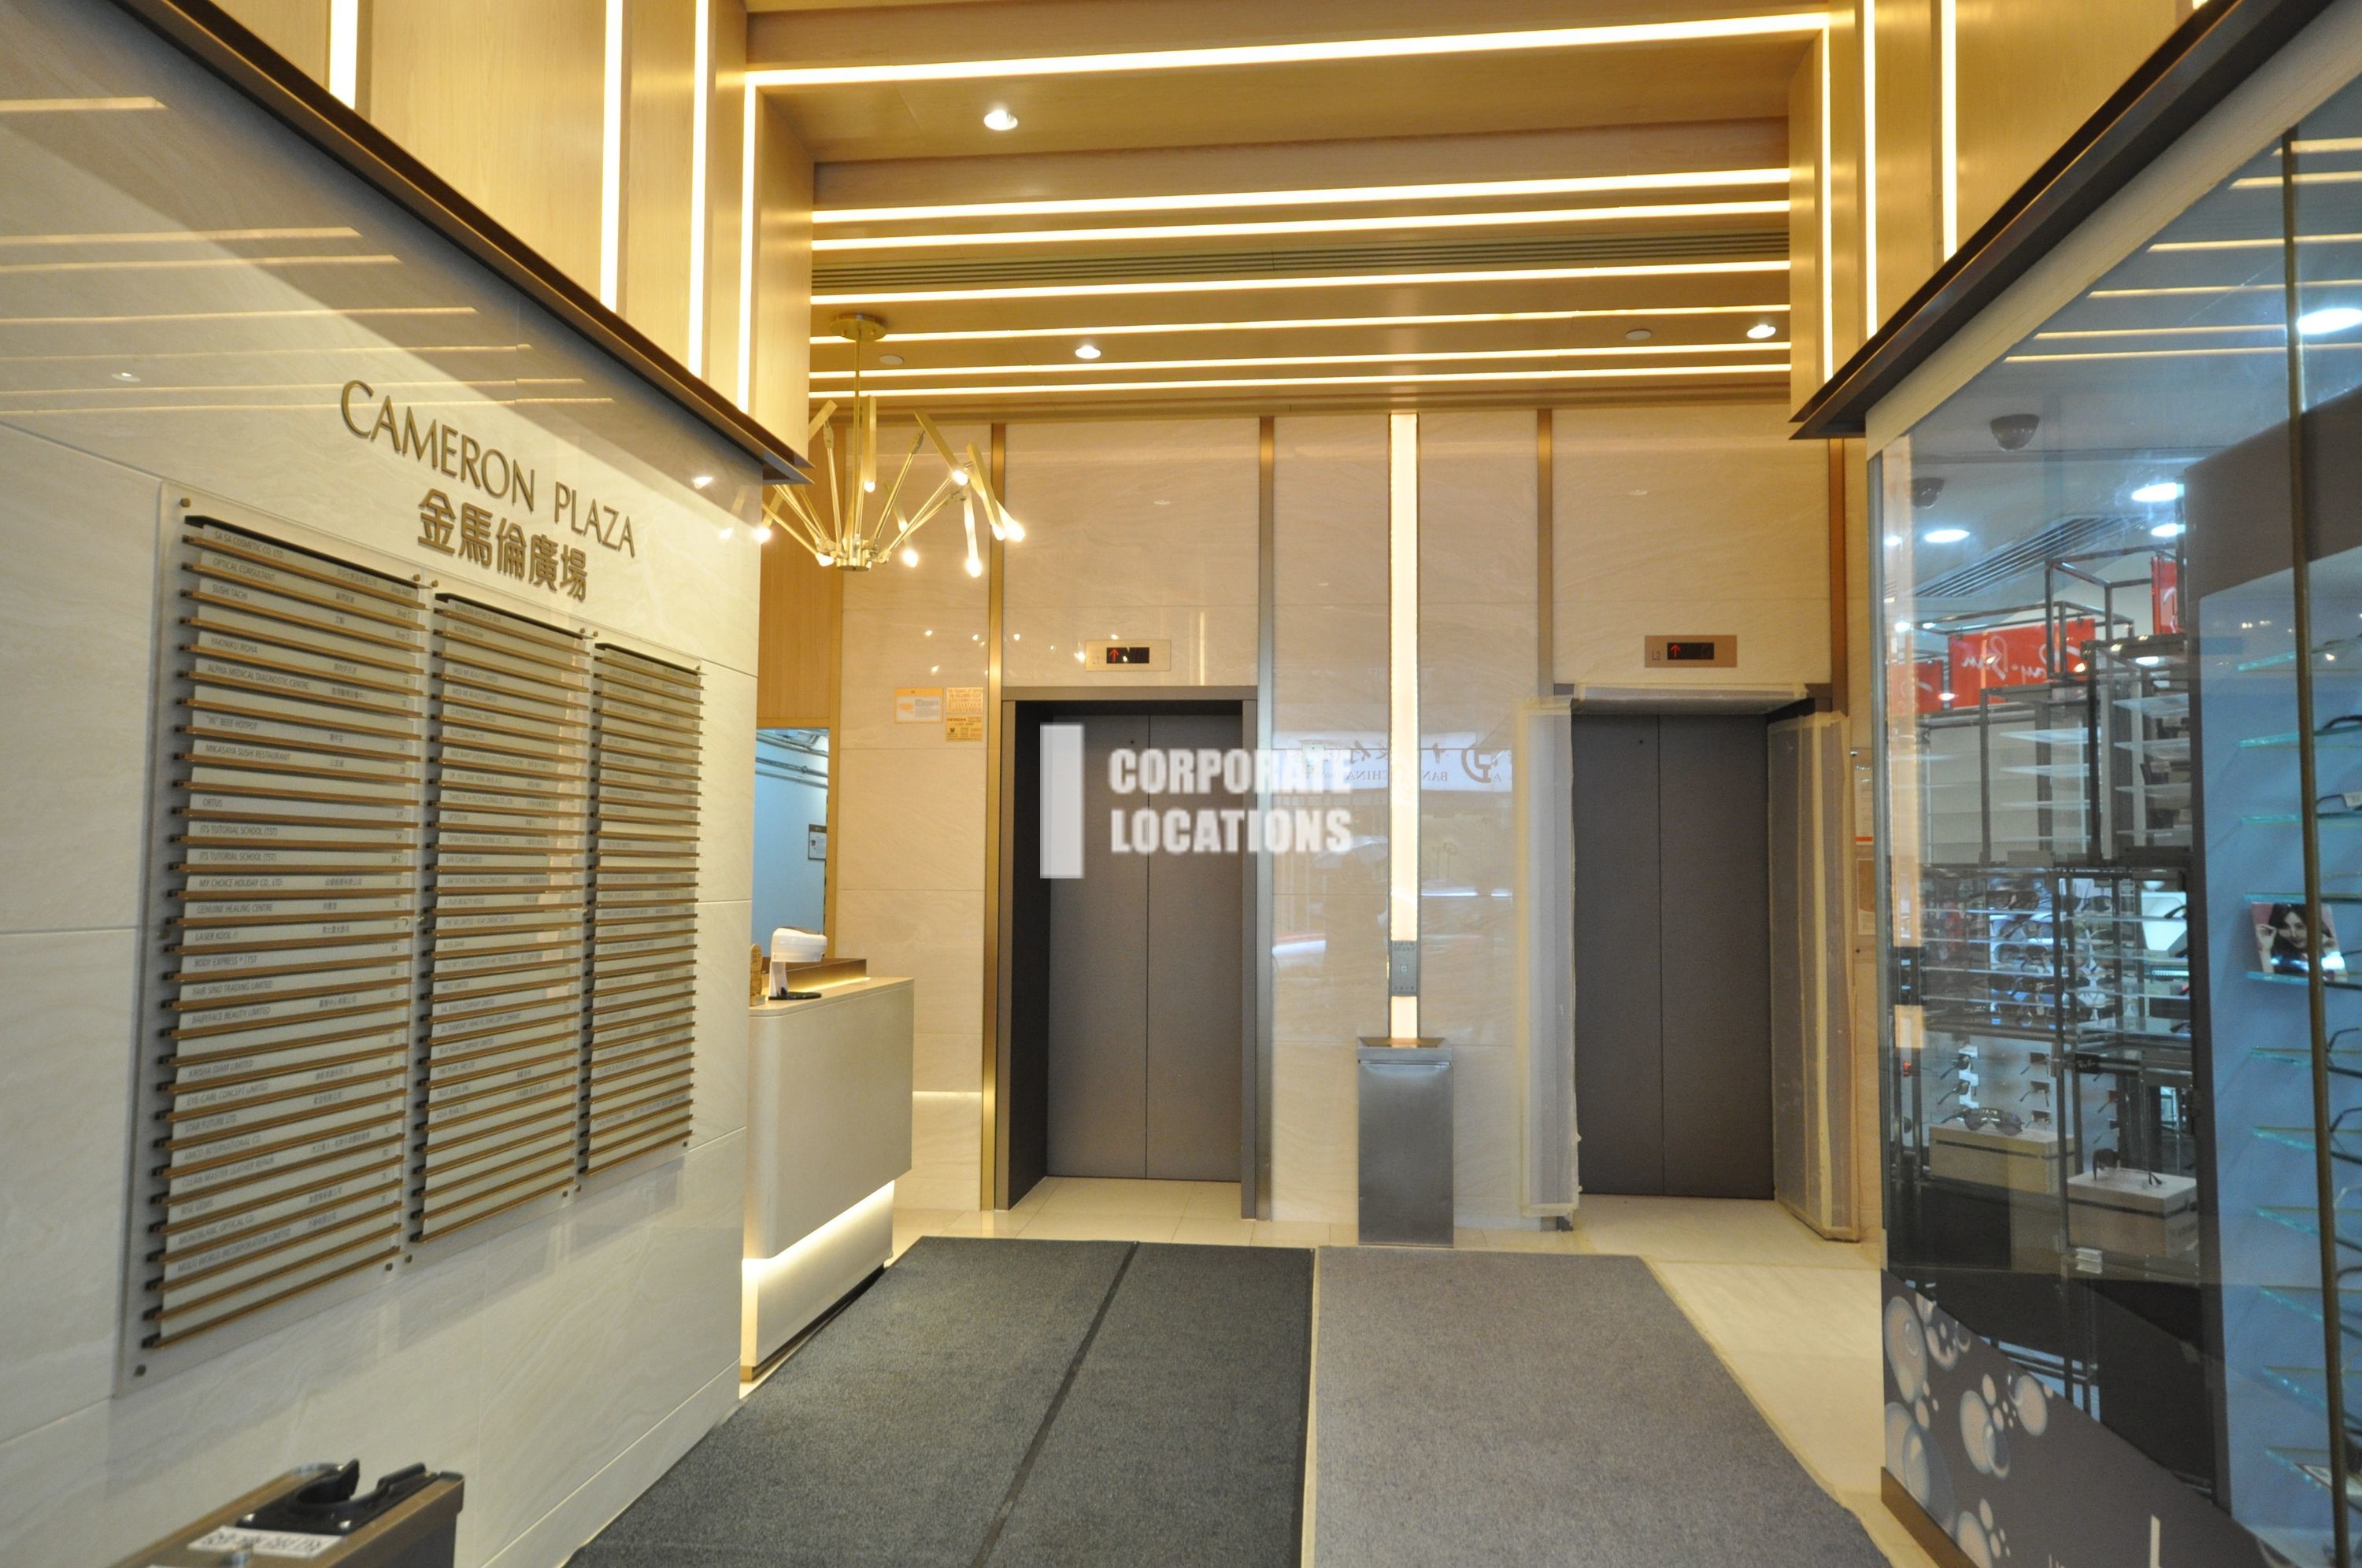 Lease offices in Cameron Plaza - Tsim Sha Tsui / Jordan